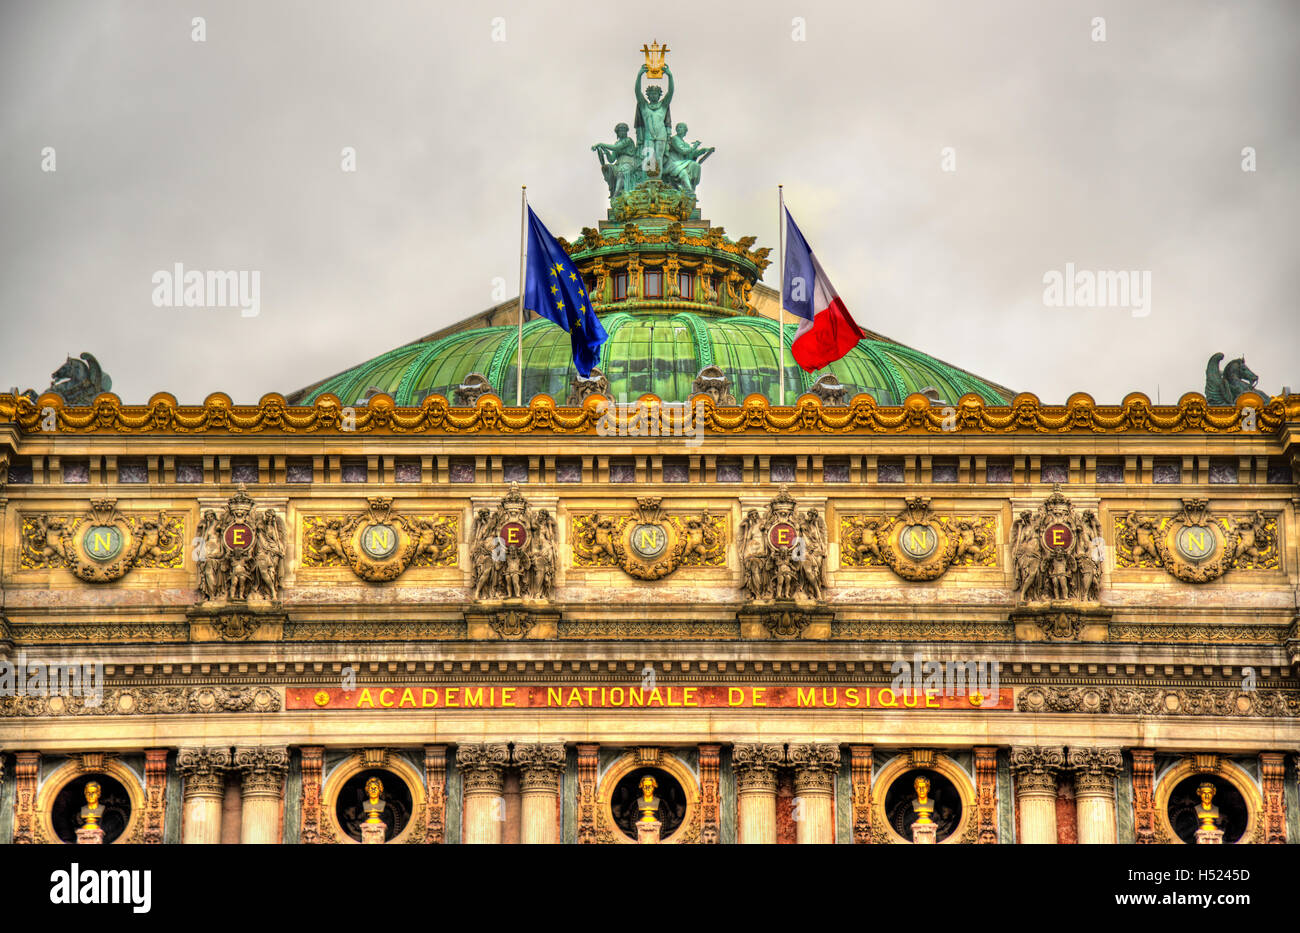 Palais Garnier, a famous opera house in Paris, France Stock Photo